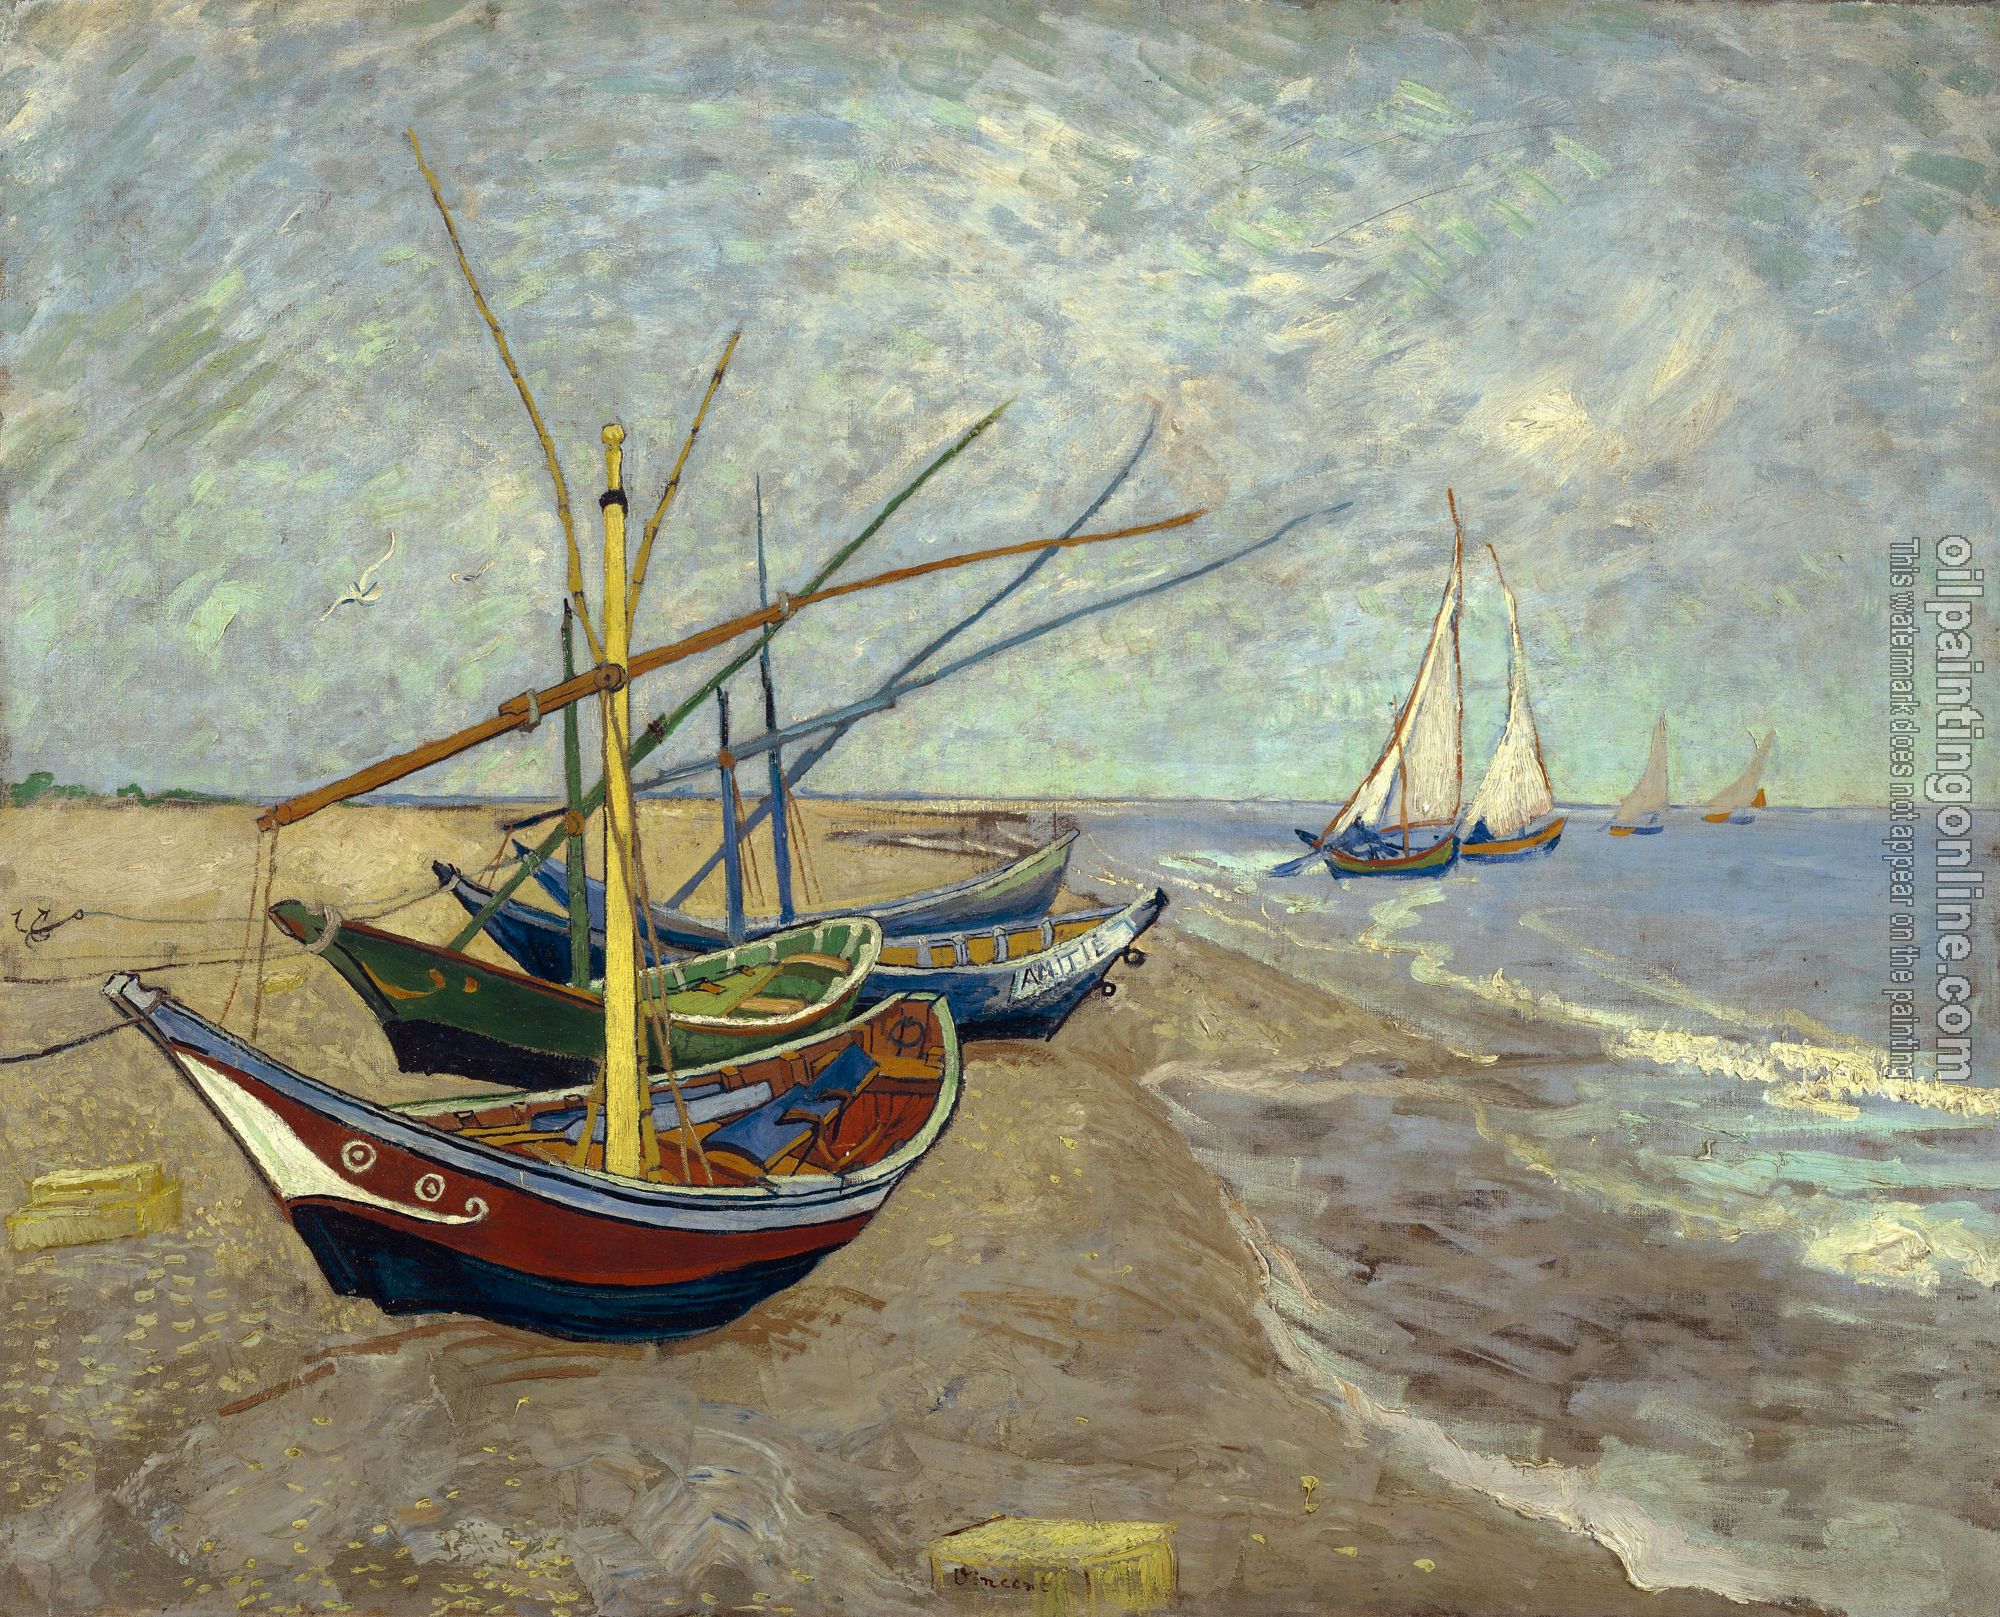 Gogh, Vincent van - Fishing boats on the beach